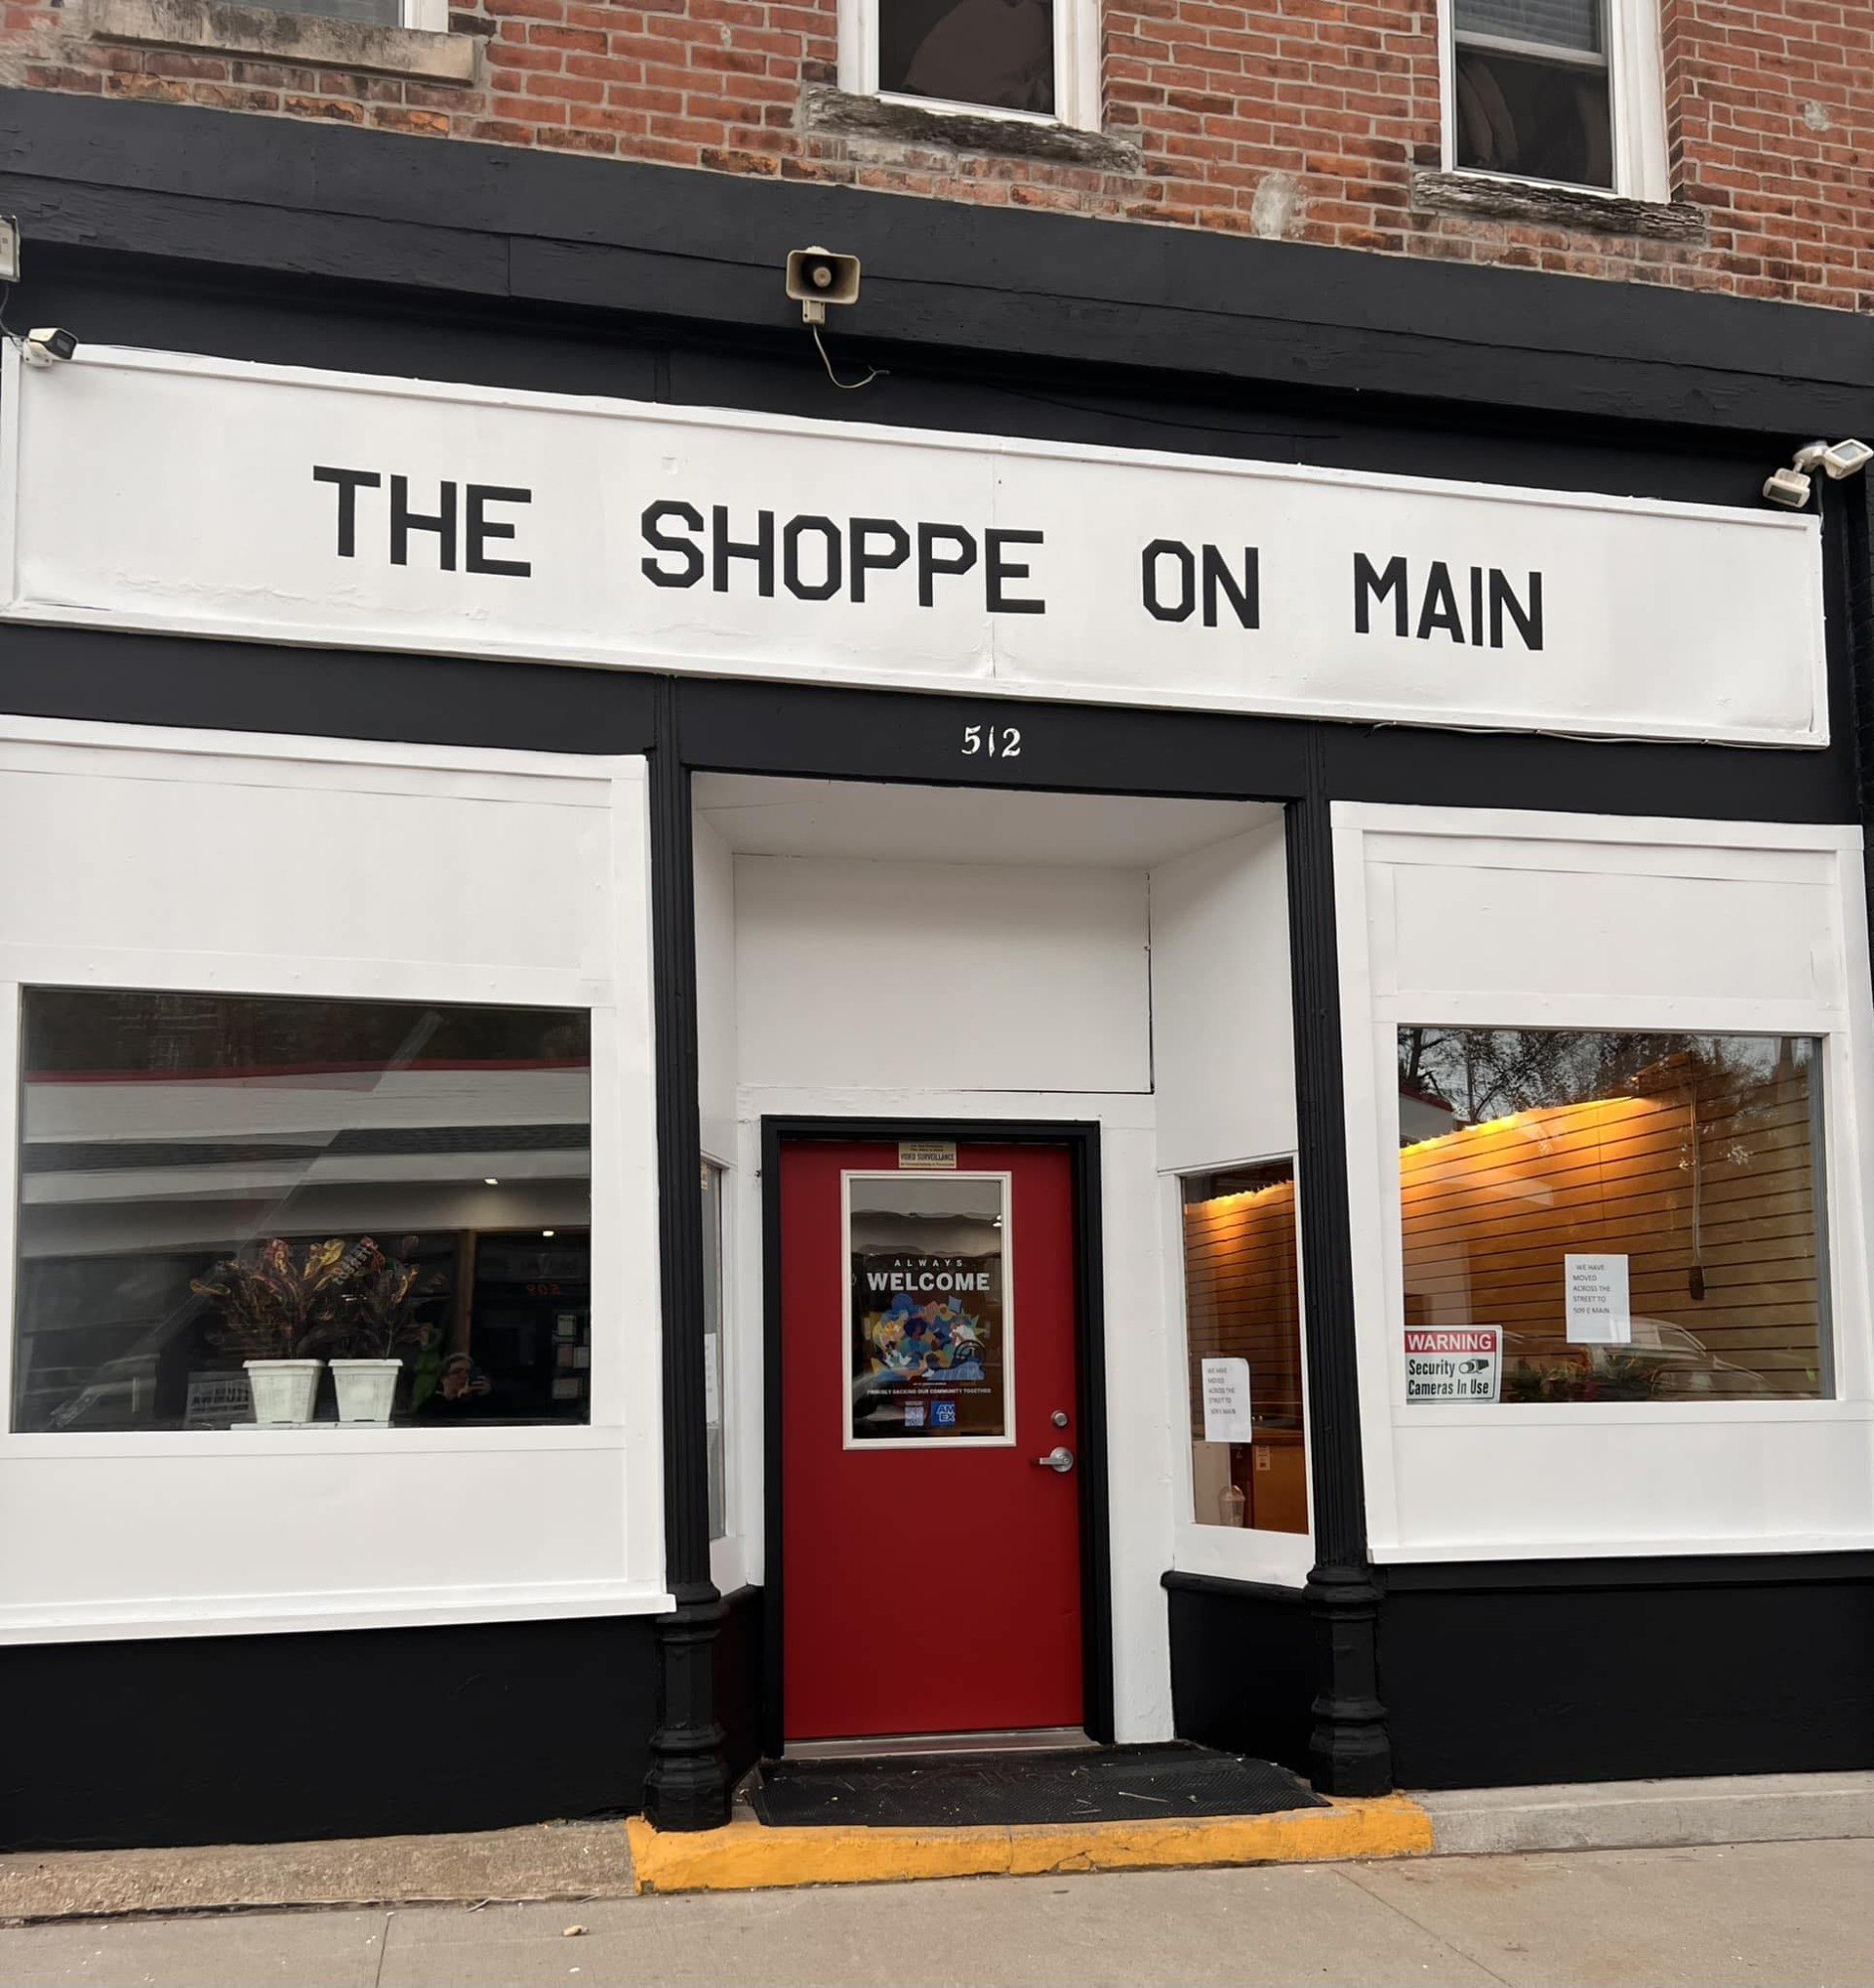 The Shoppe on Main